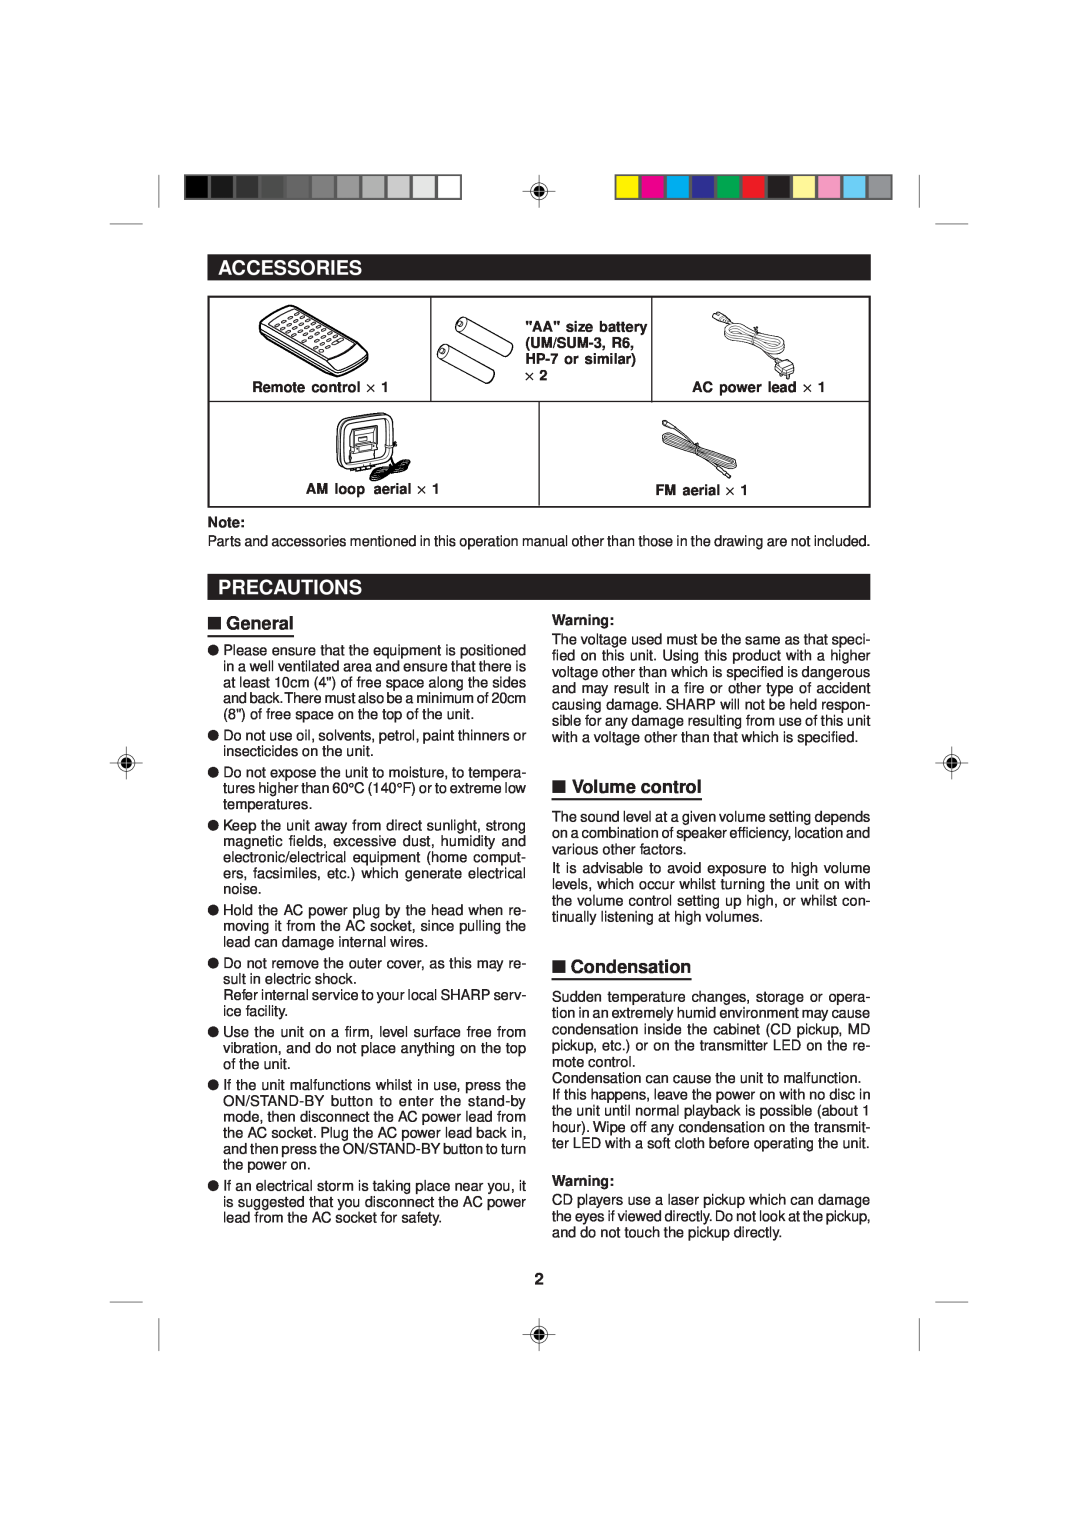 Sharp MD-M1H operation manual Accessories, Precautions, General, Volume control, Condensation 